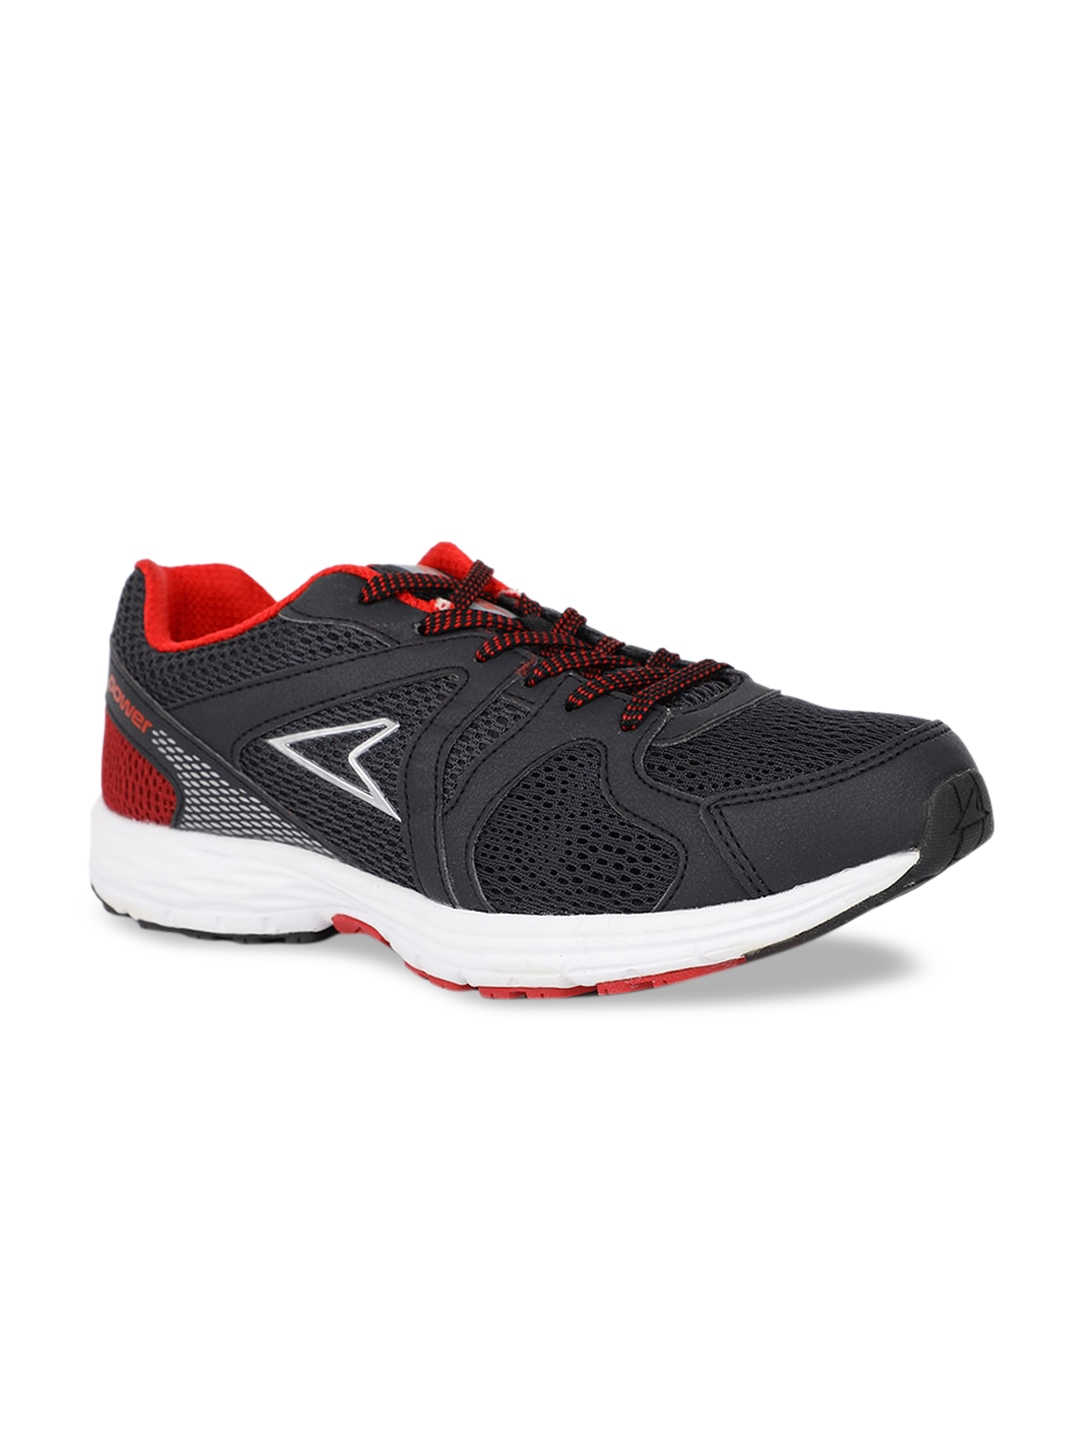 Buy Power Men Black PU Running Shoes - Sports Shoes for Men 12998178 ...